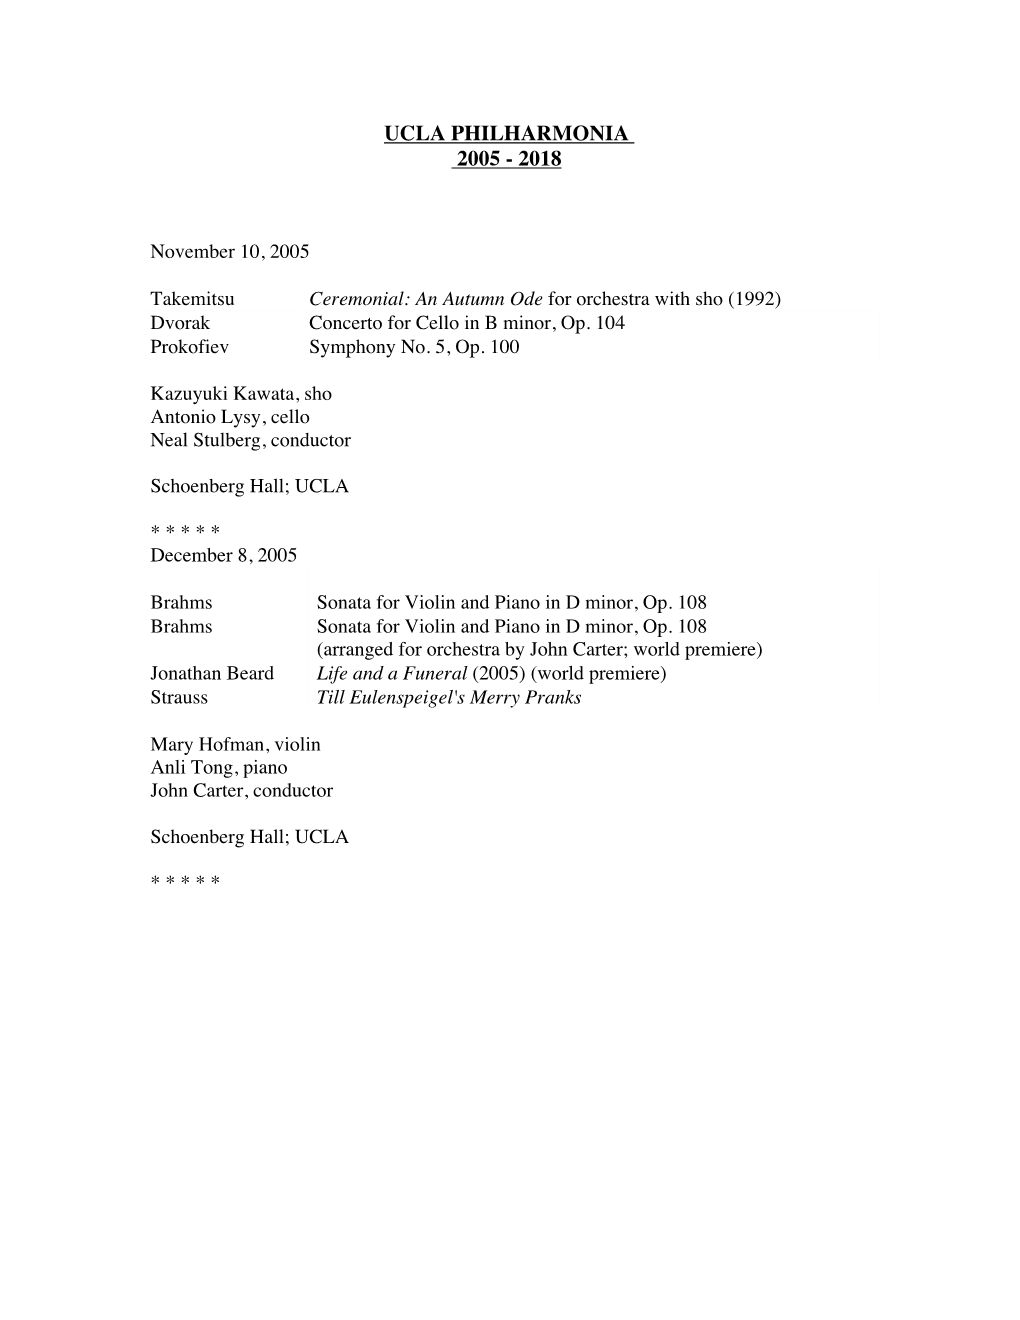 UCLA Philharmonia Programs 2005-2018